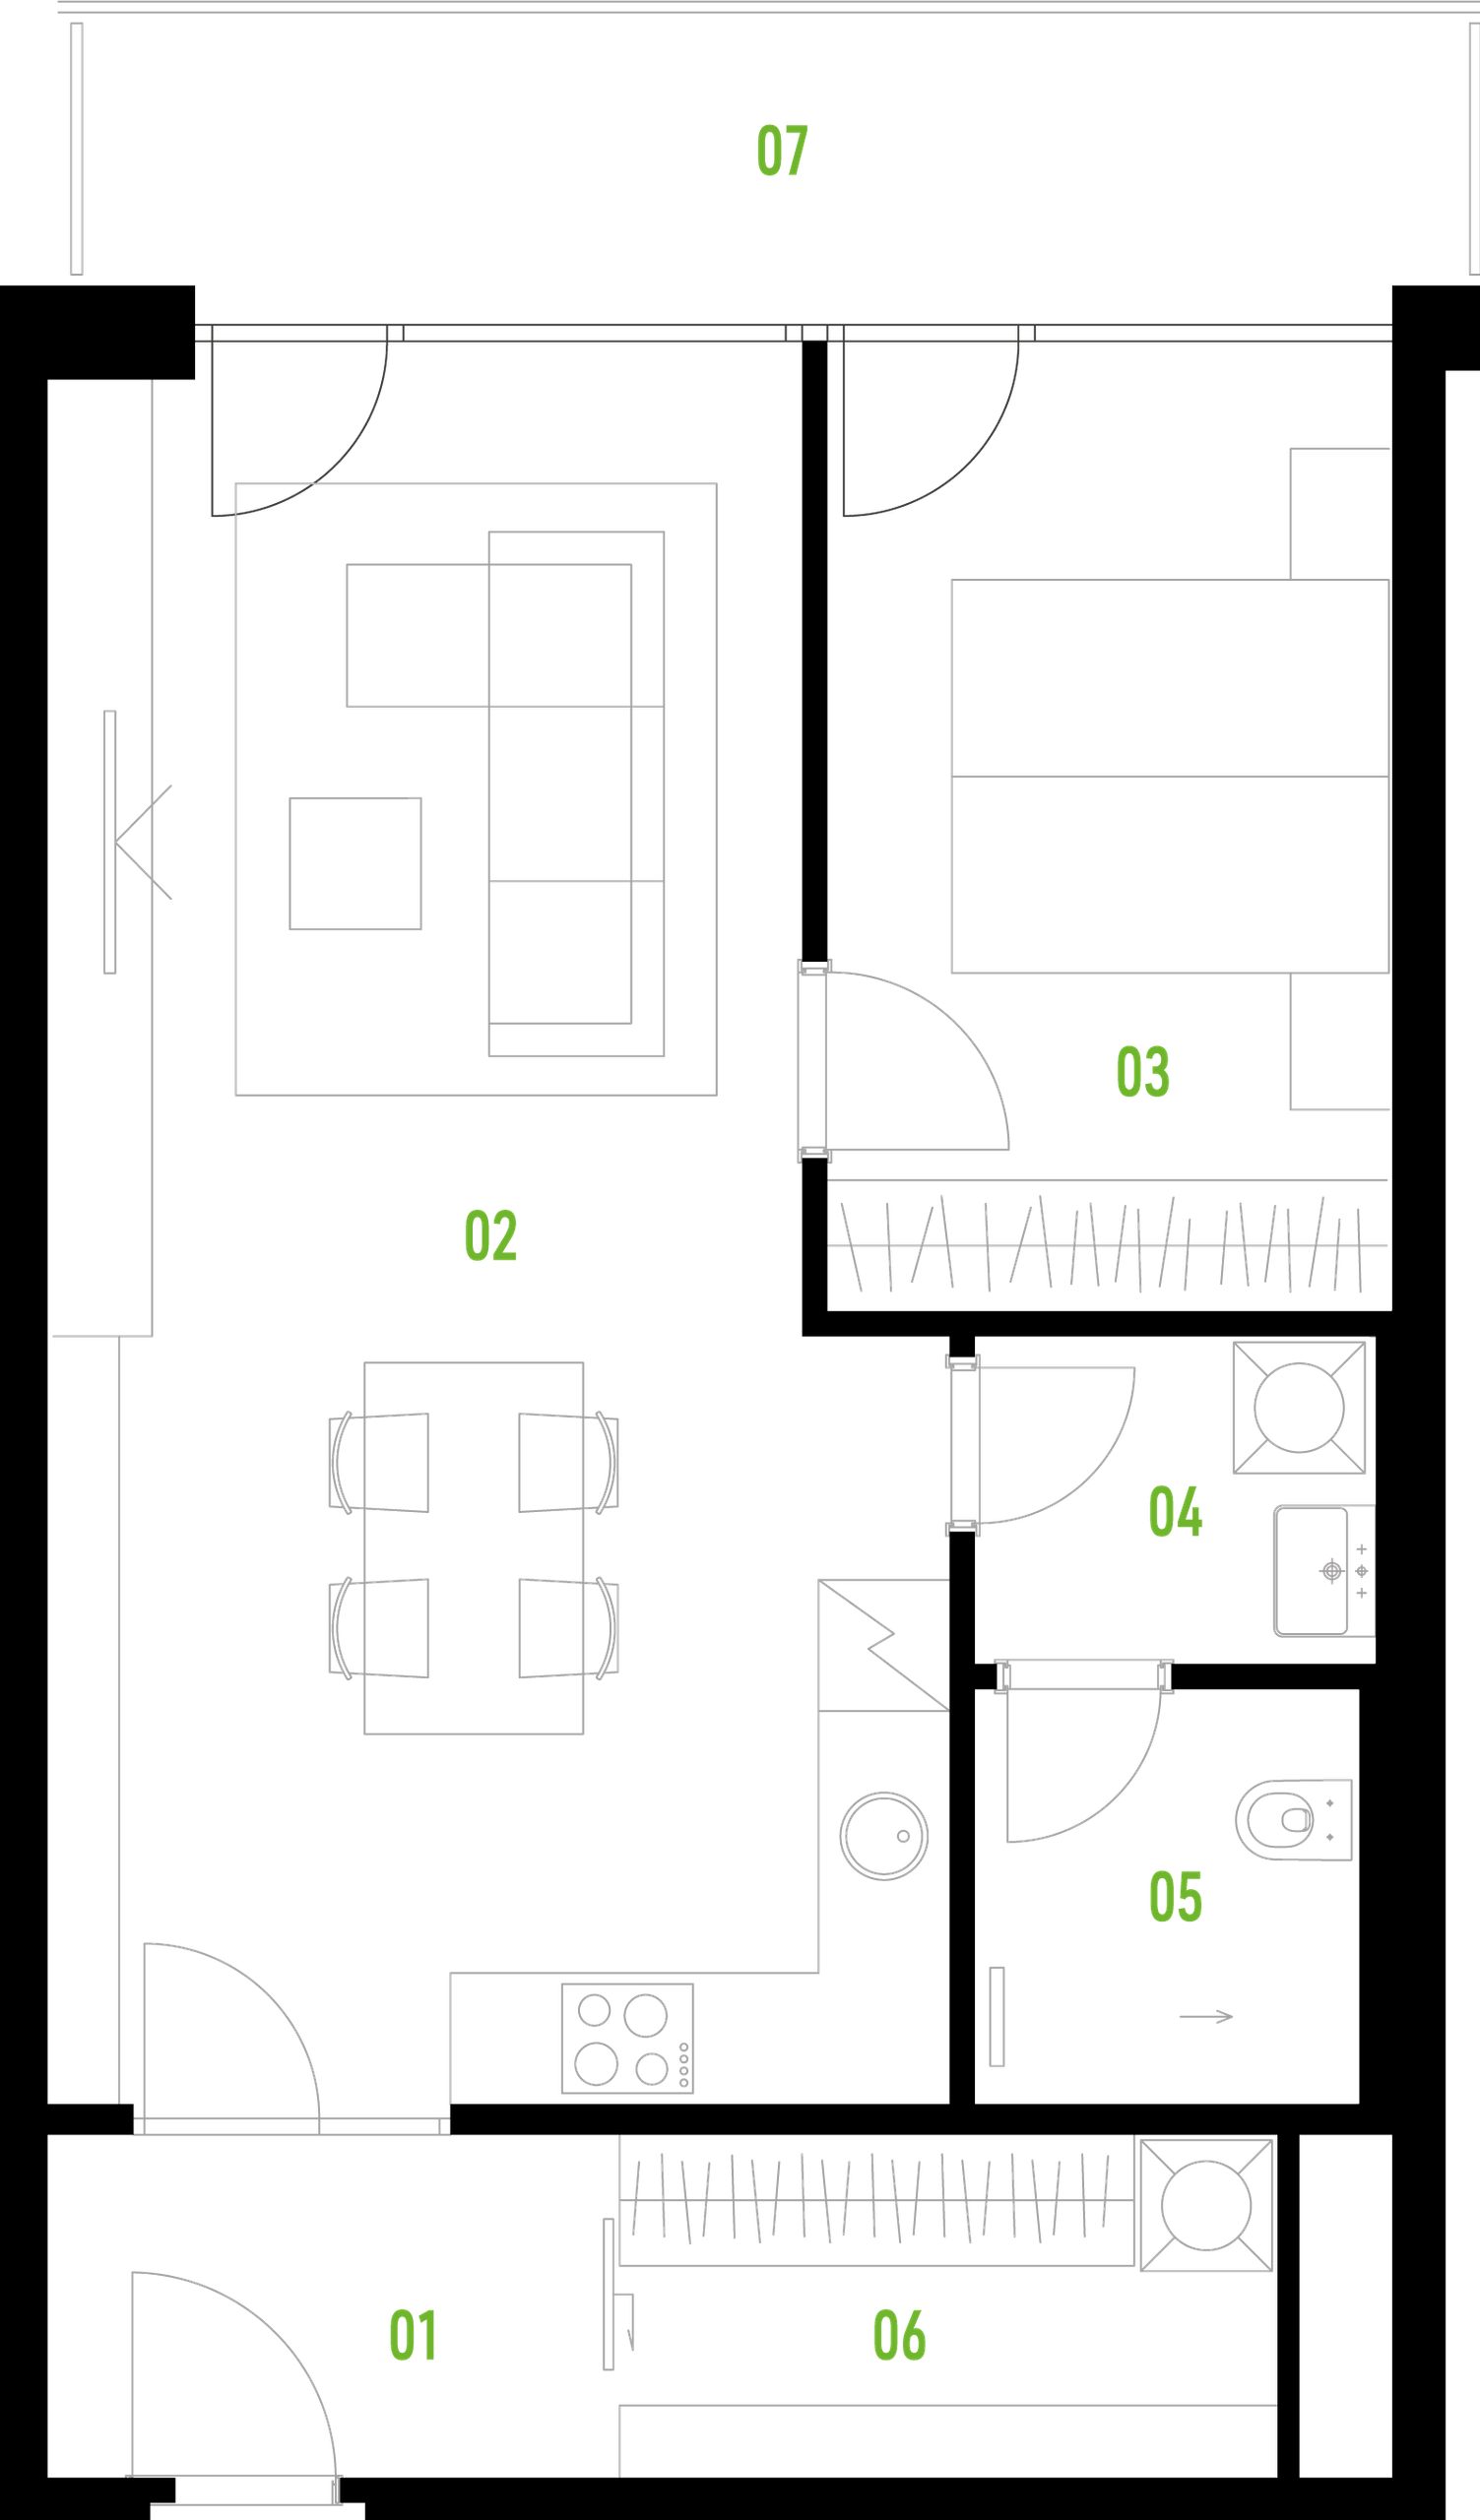 B24 floor plan